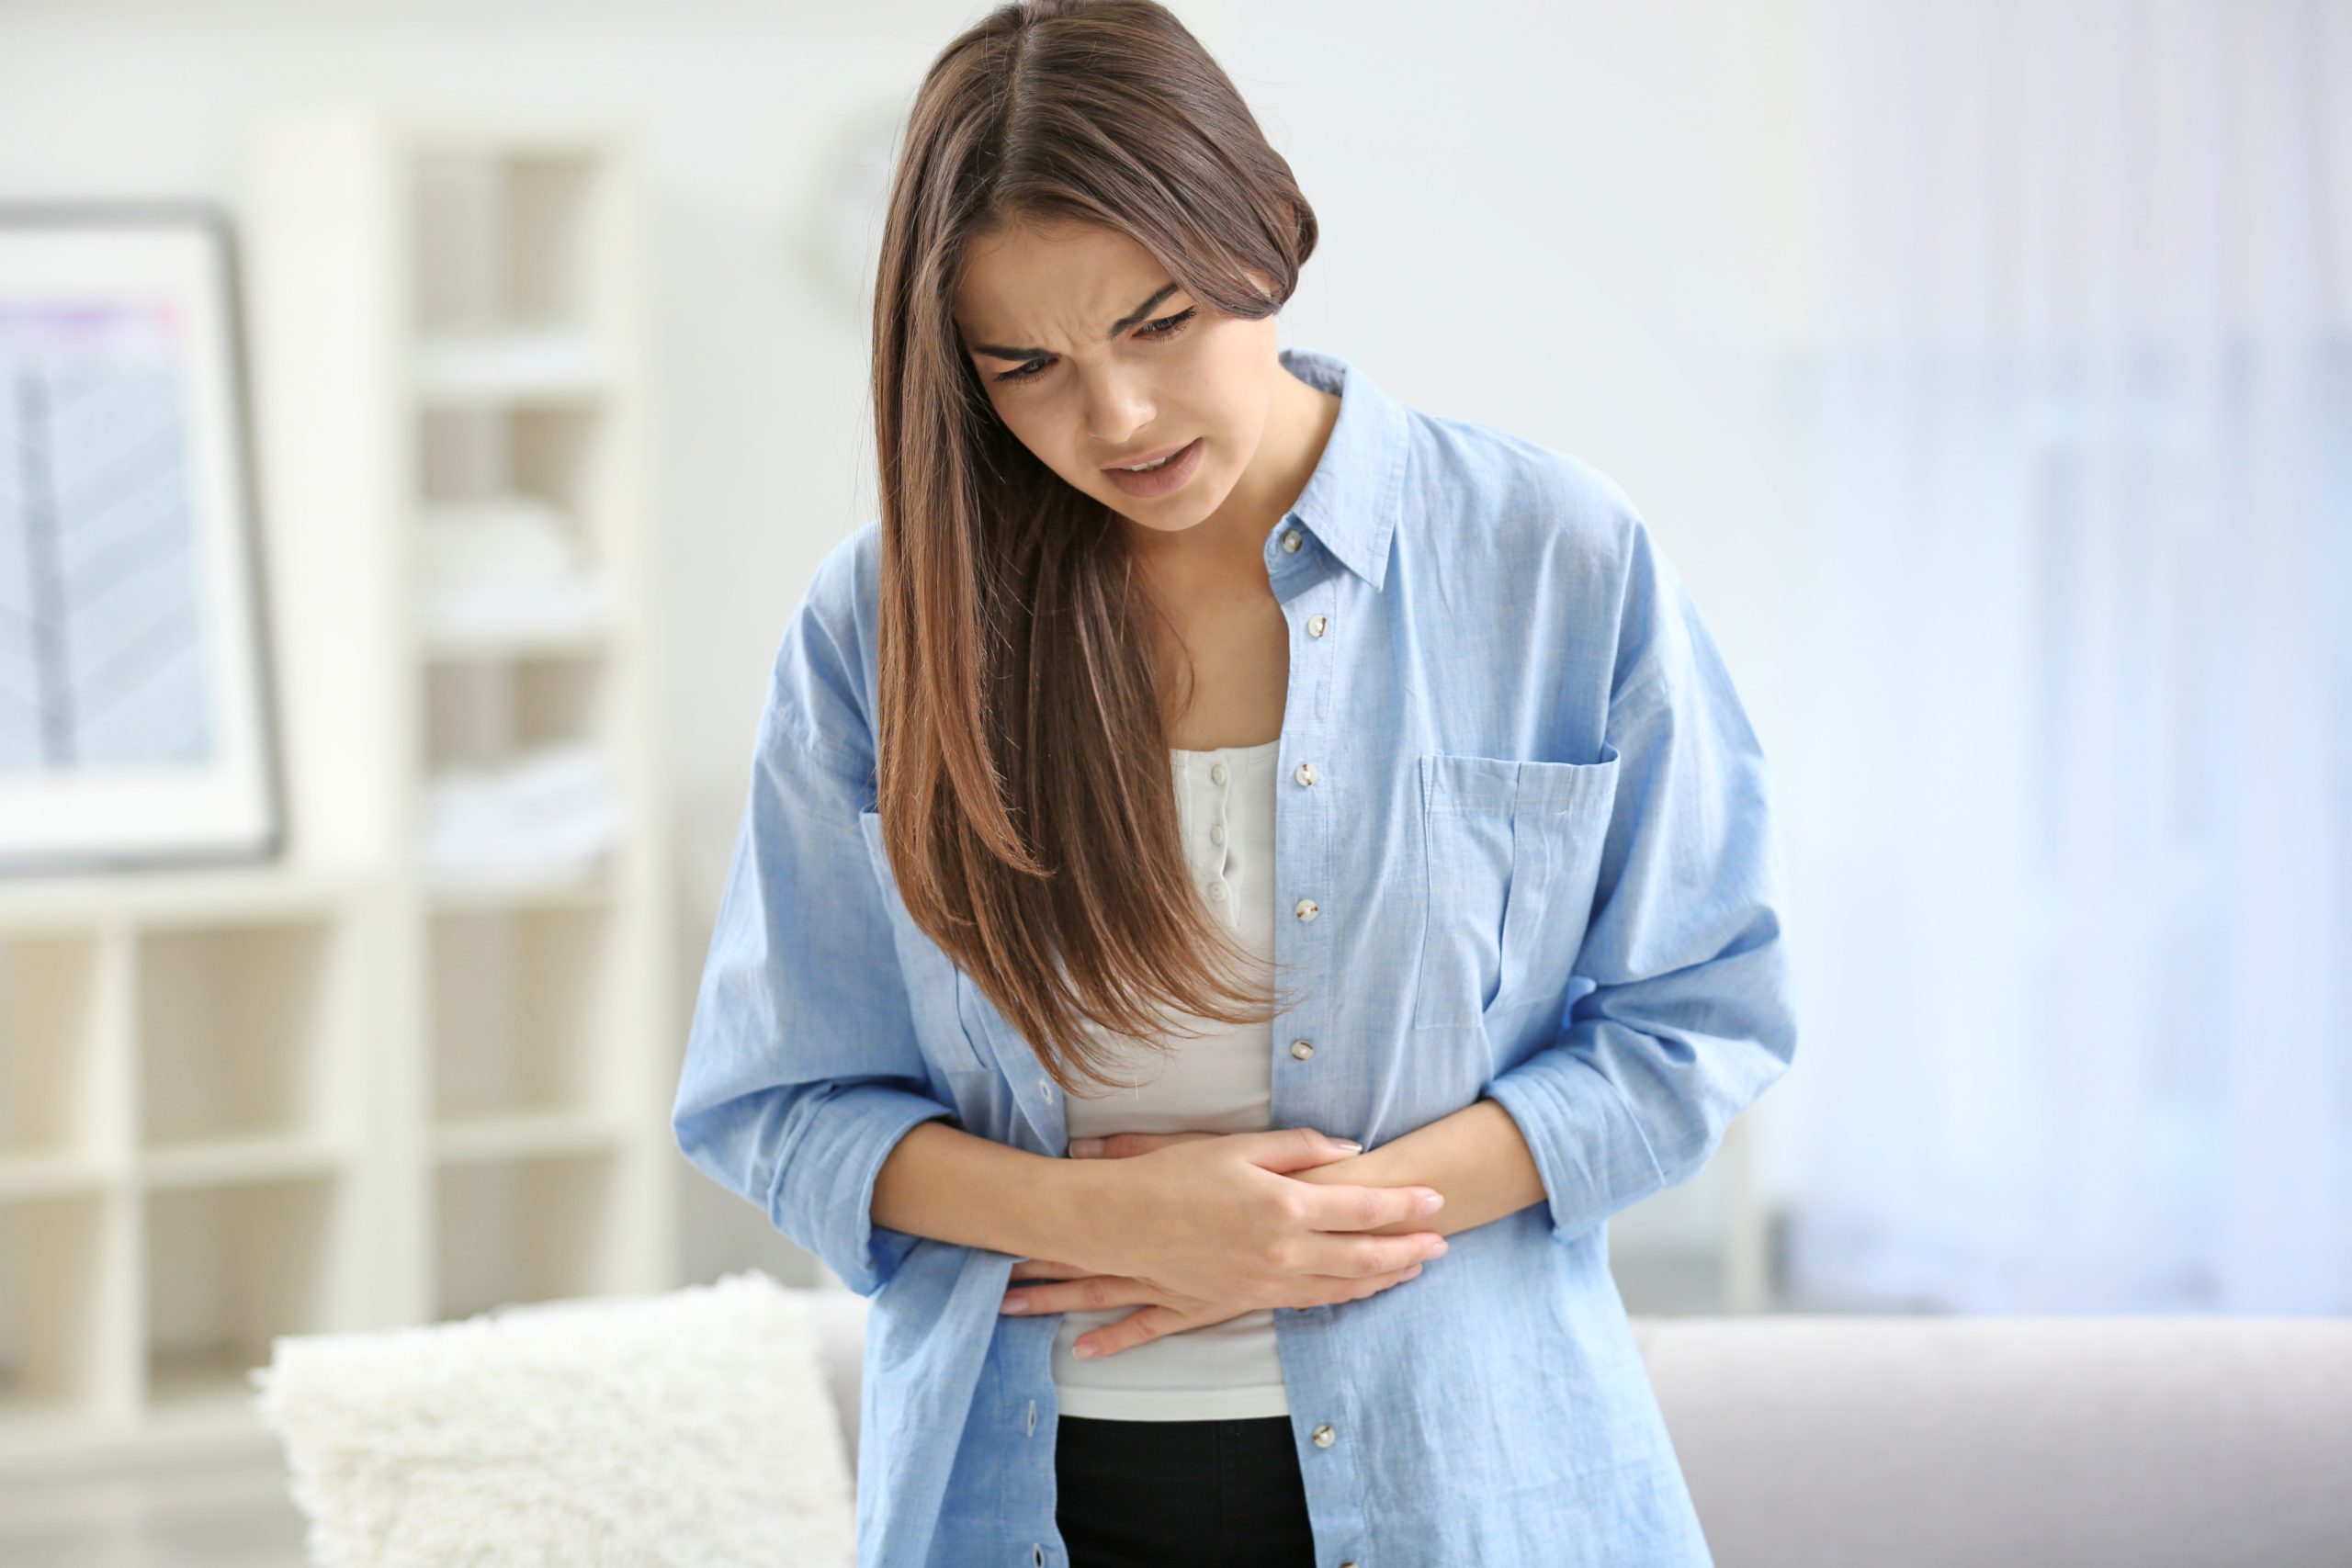 Endometriosis: Everything You Need to Know